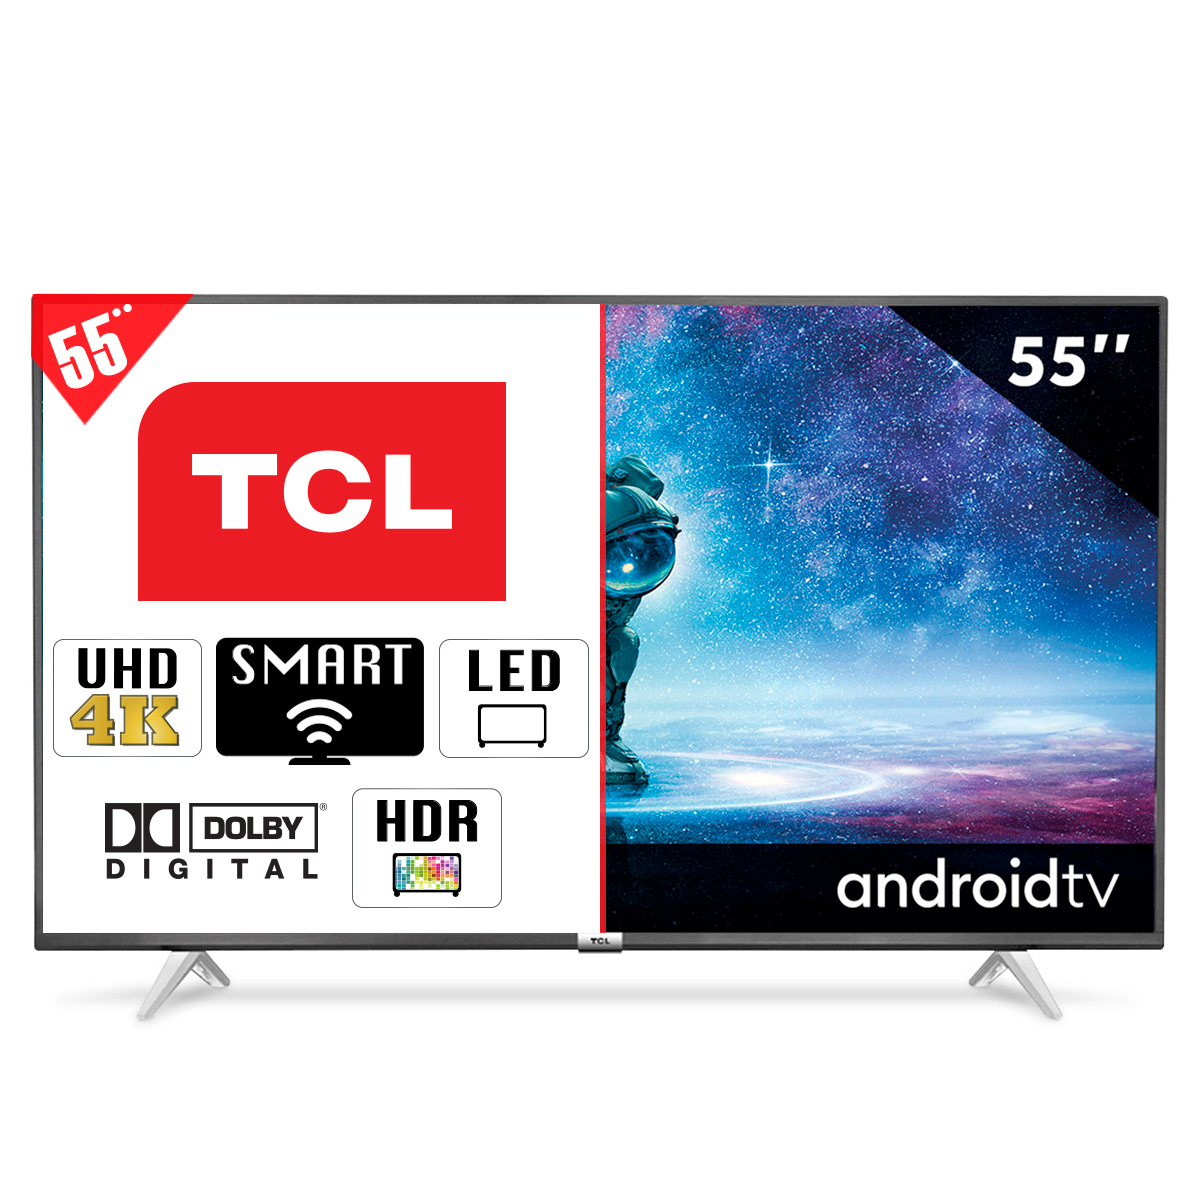 Pantalla TV TCL 55A445 / 4K Ultra HD / 55 Pulg. / Smart TV / Led / Bluetooth / Dolby Digital / HDMI / USB